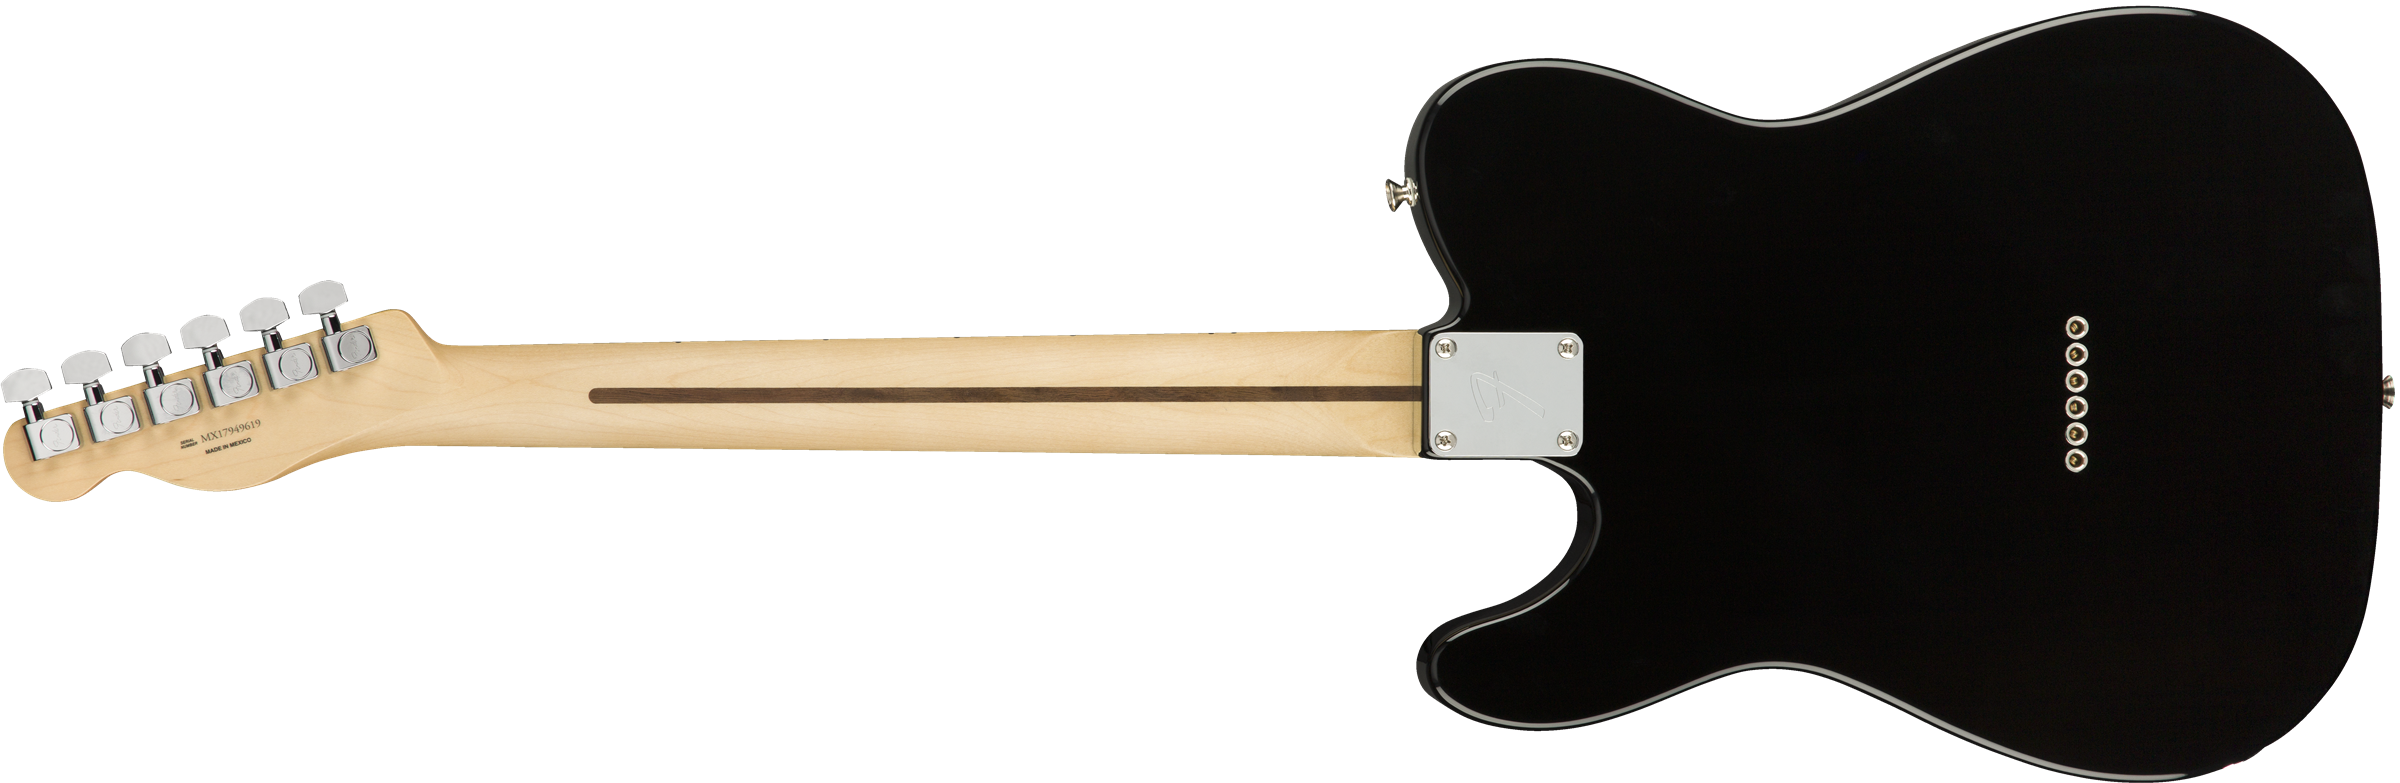 Fender Player Telecaster, Maple Fingerboard, Black 0145212506